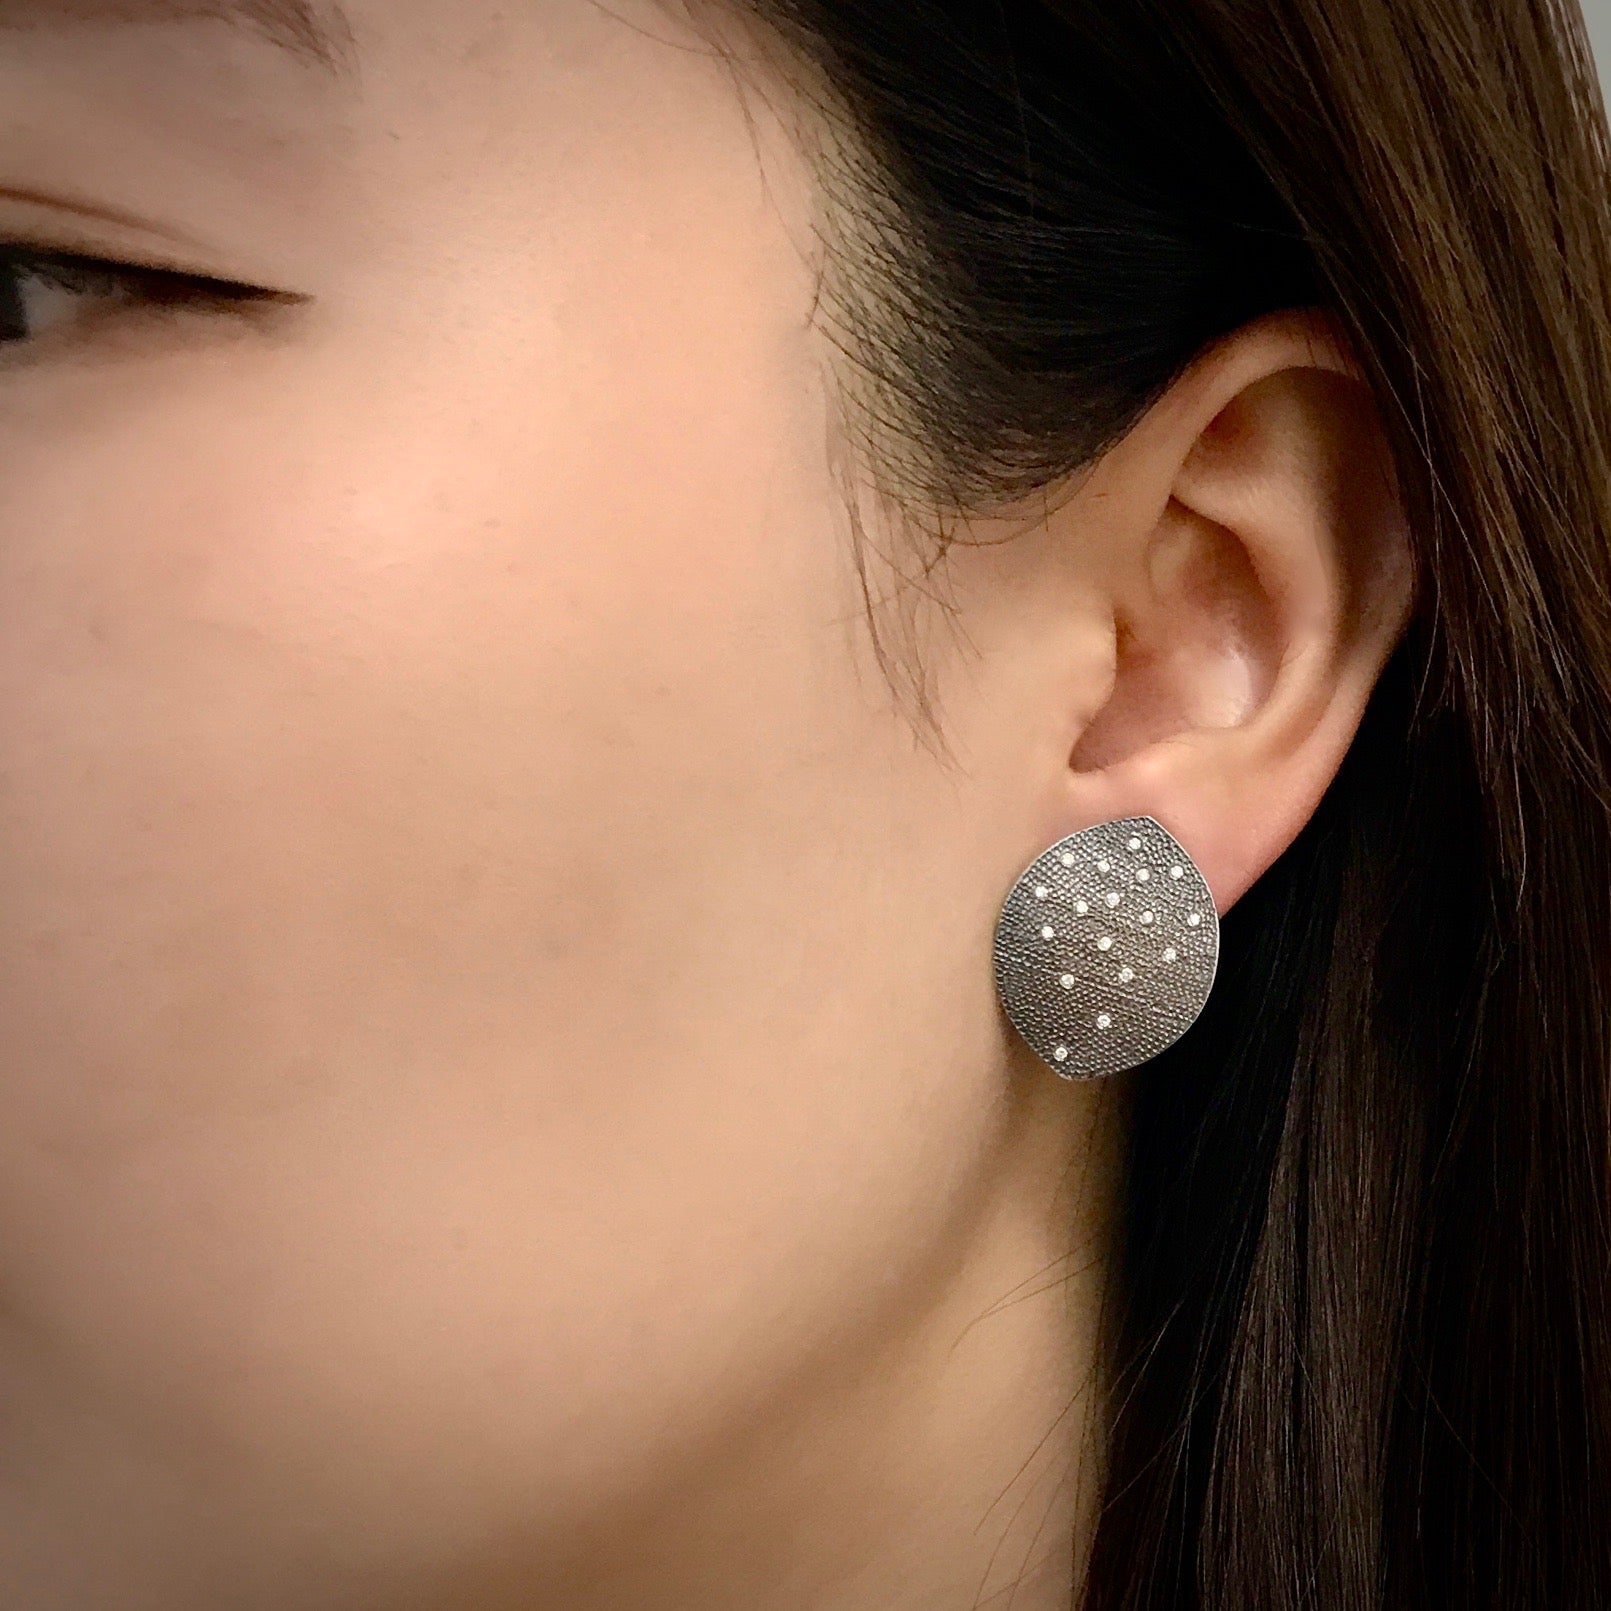 Leaf earrings in sterling silver with diamonds